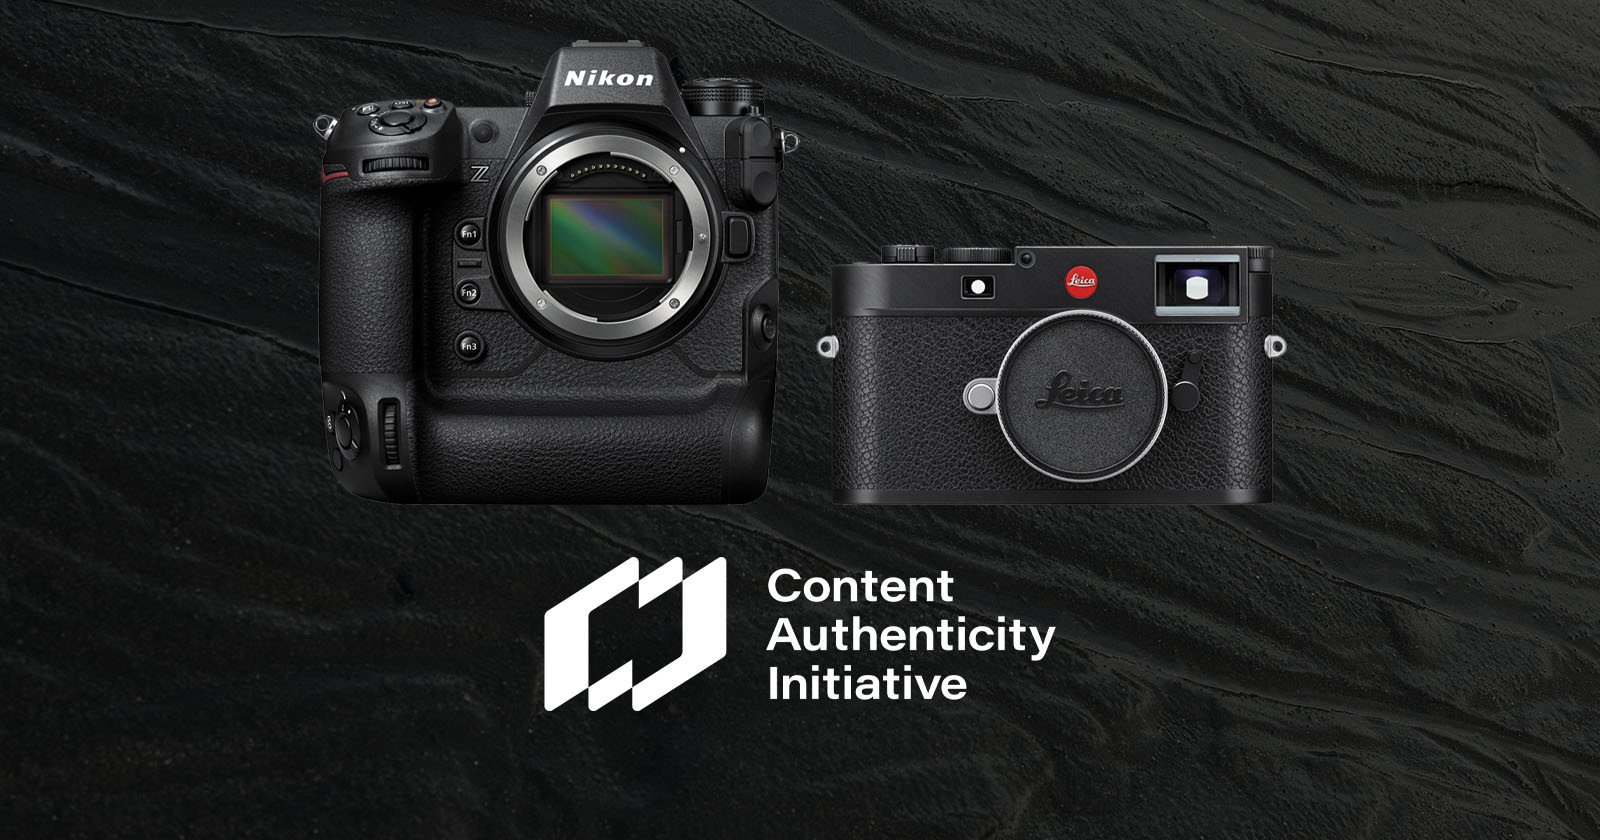 Leica and Nikon Adding Content Authenticity Tech into Their Cameras